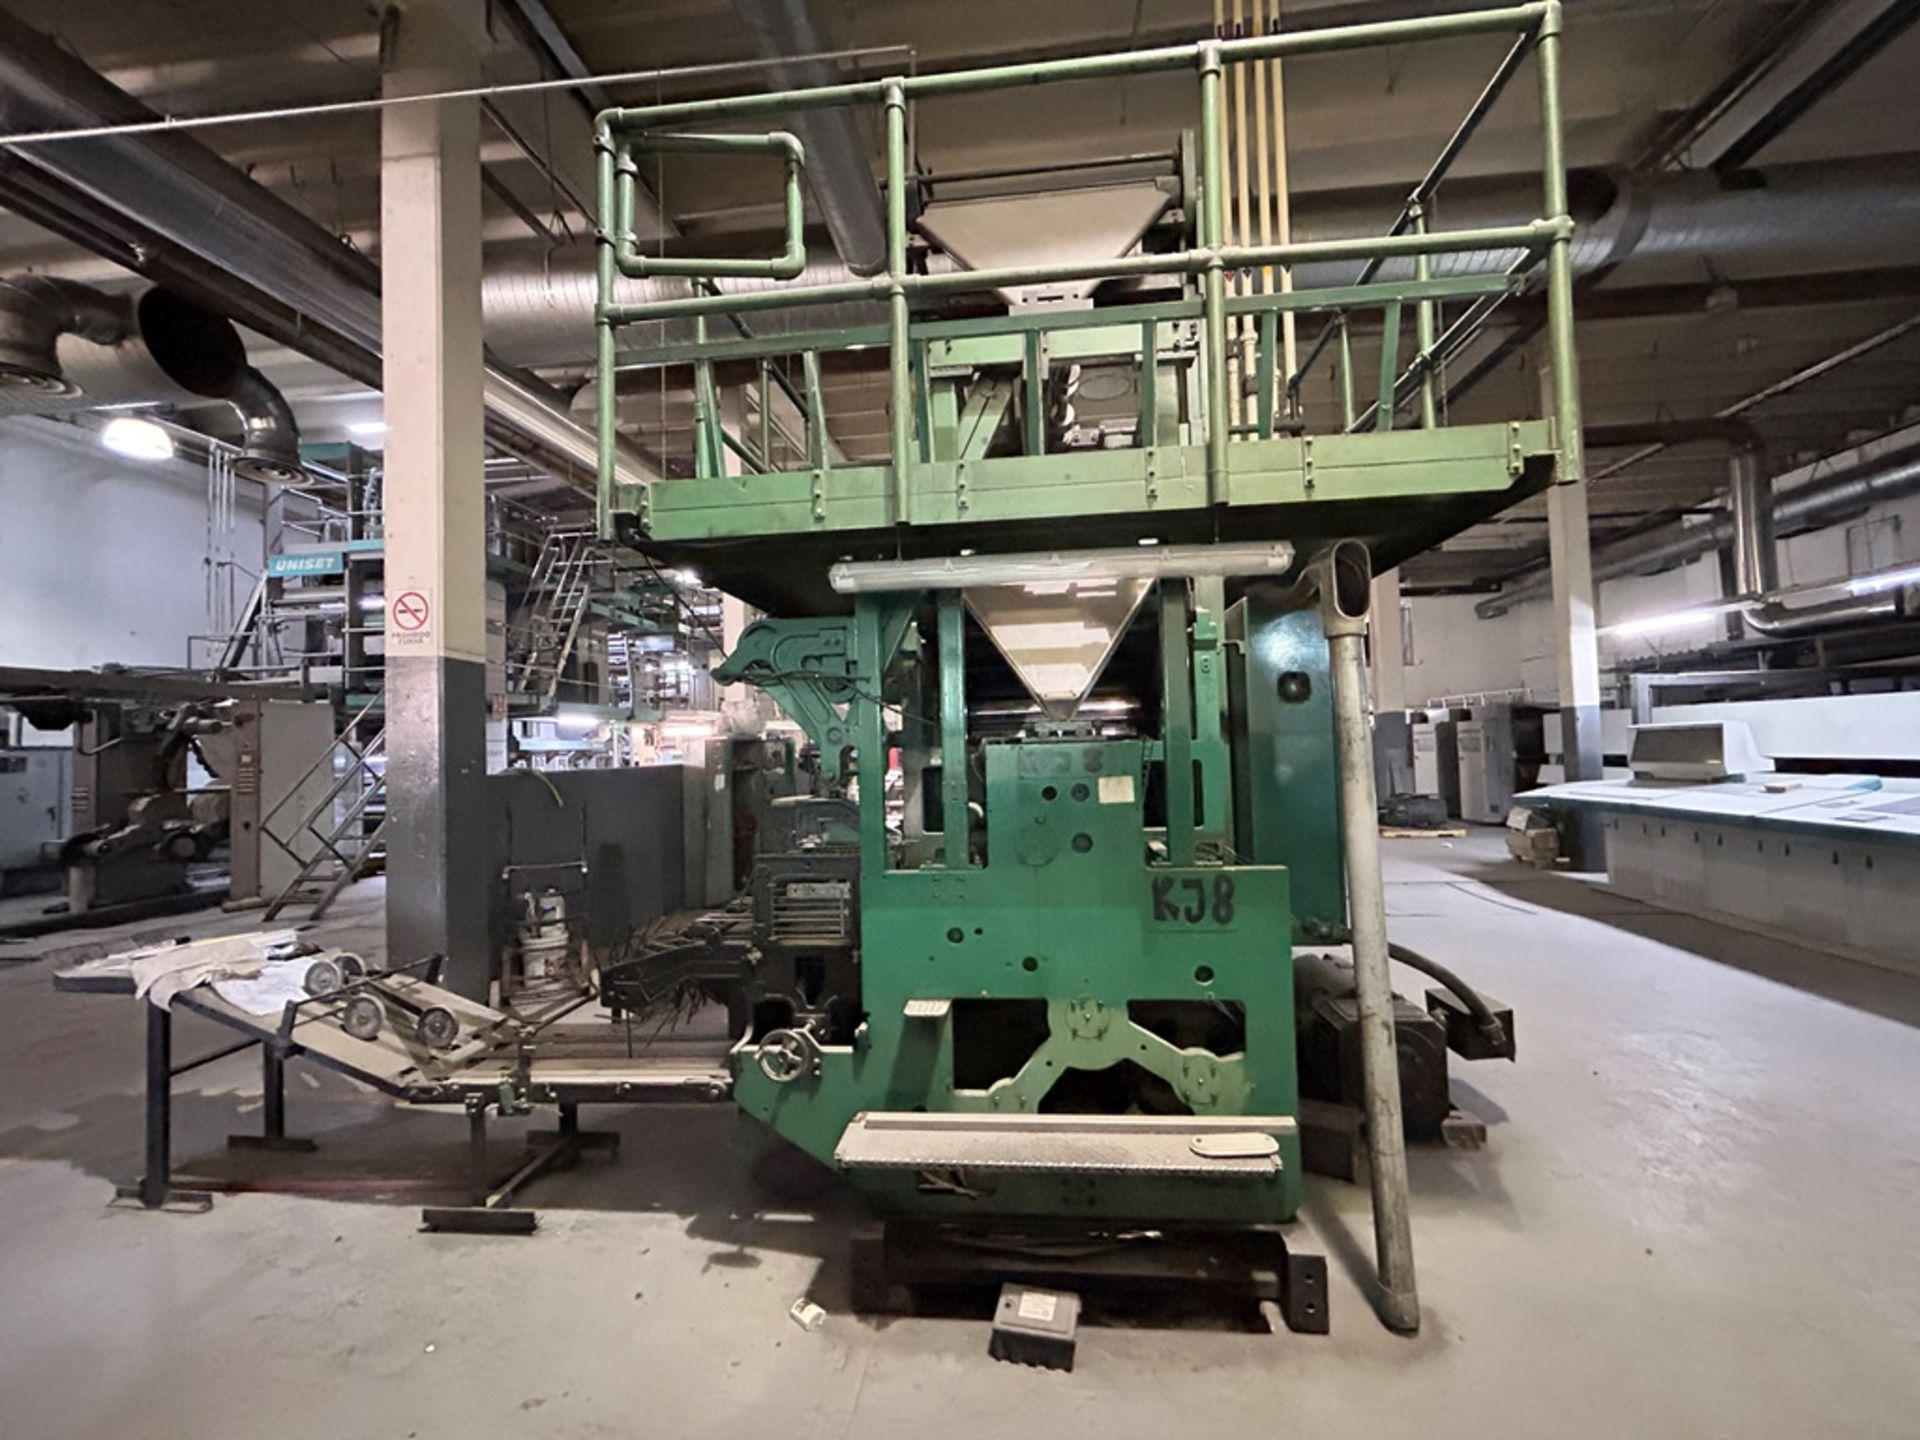 NEWS KING rotary printing machine, Model KING PRESS KJ8, Serial No. P2680-1.F21C2-9-89 CM-1000, Yea - Image 7 of 14